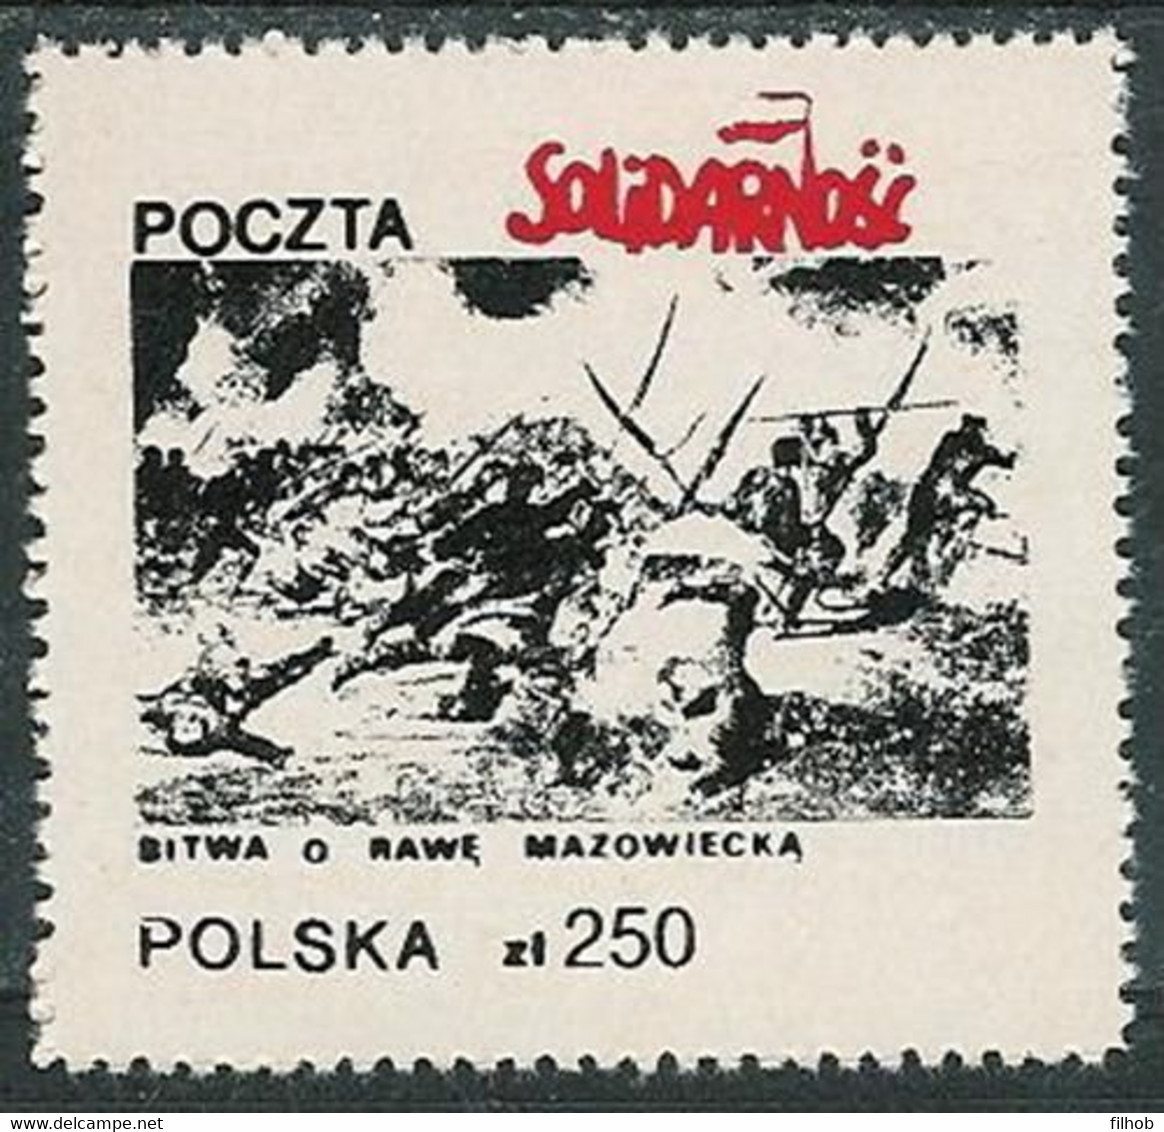 Poland SOLIDARITY (S092): Battle Of Rawa Mazowiecka - Viñetas Solidarnosc